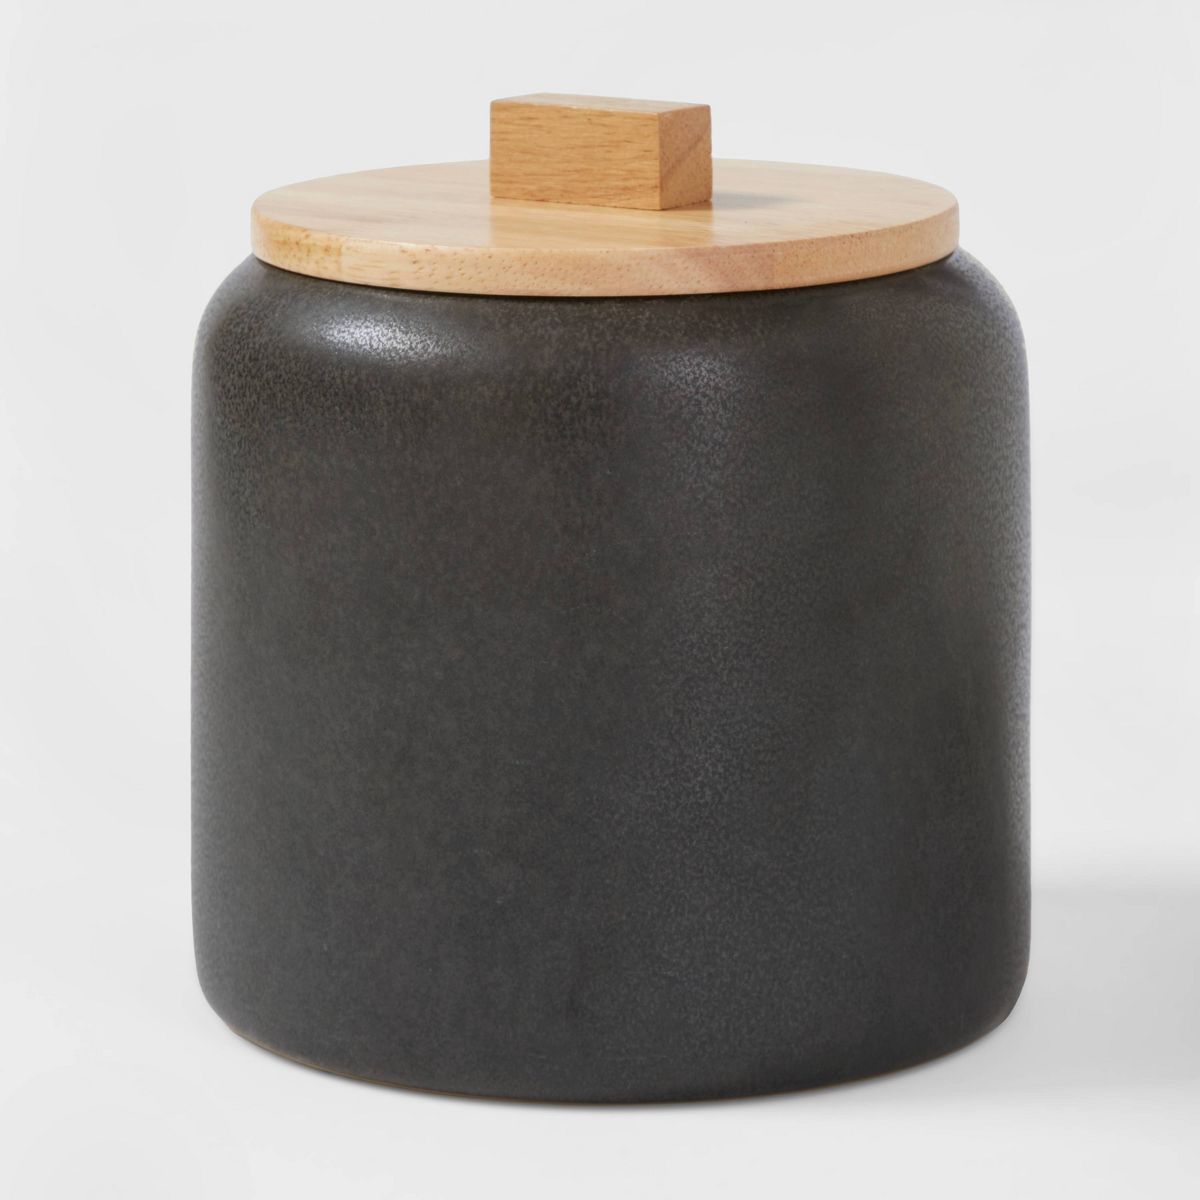 Medium Stoneware Tilley Food Storage Canister with Wood Lid Black - Threshold™ | Target